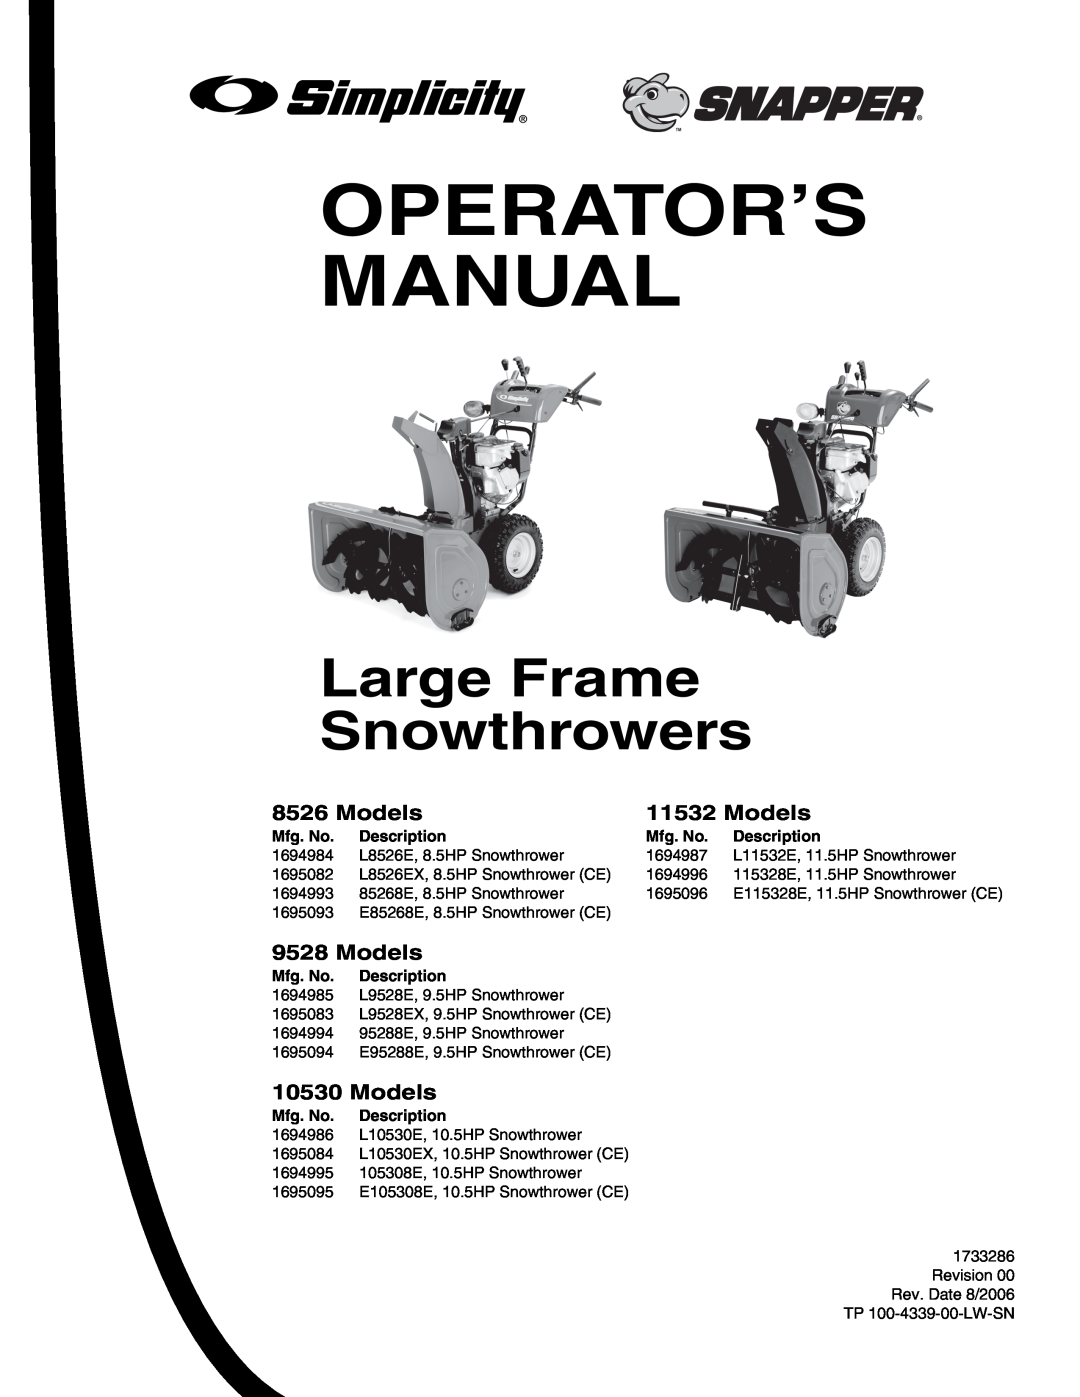 Snapper 8526, 9528, 10530, 11532 manual Models, Operator’S Manual, Large Frame Snowthrowers, Mfg. No, Description 